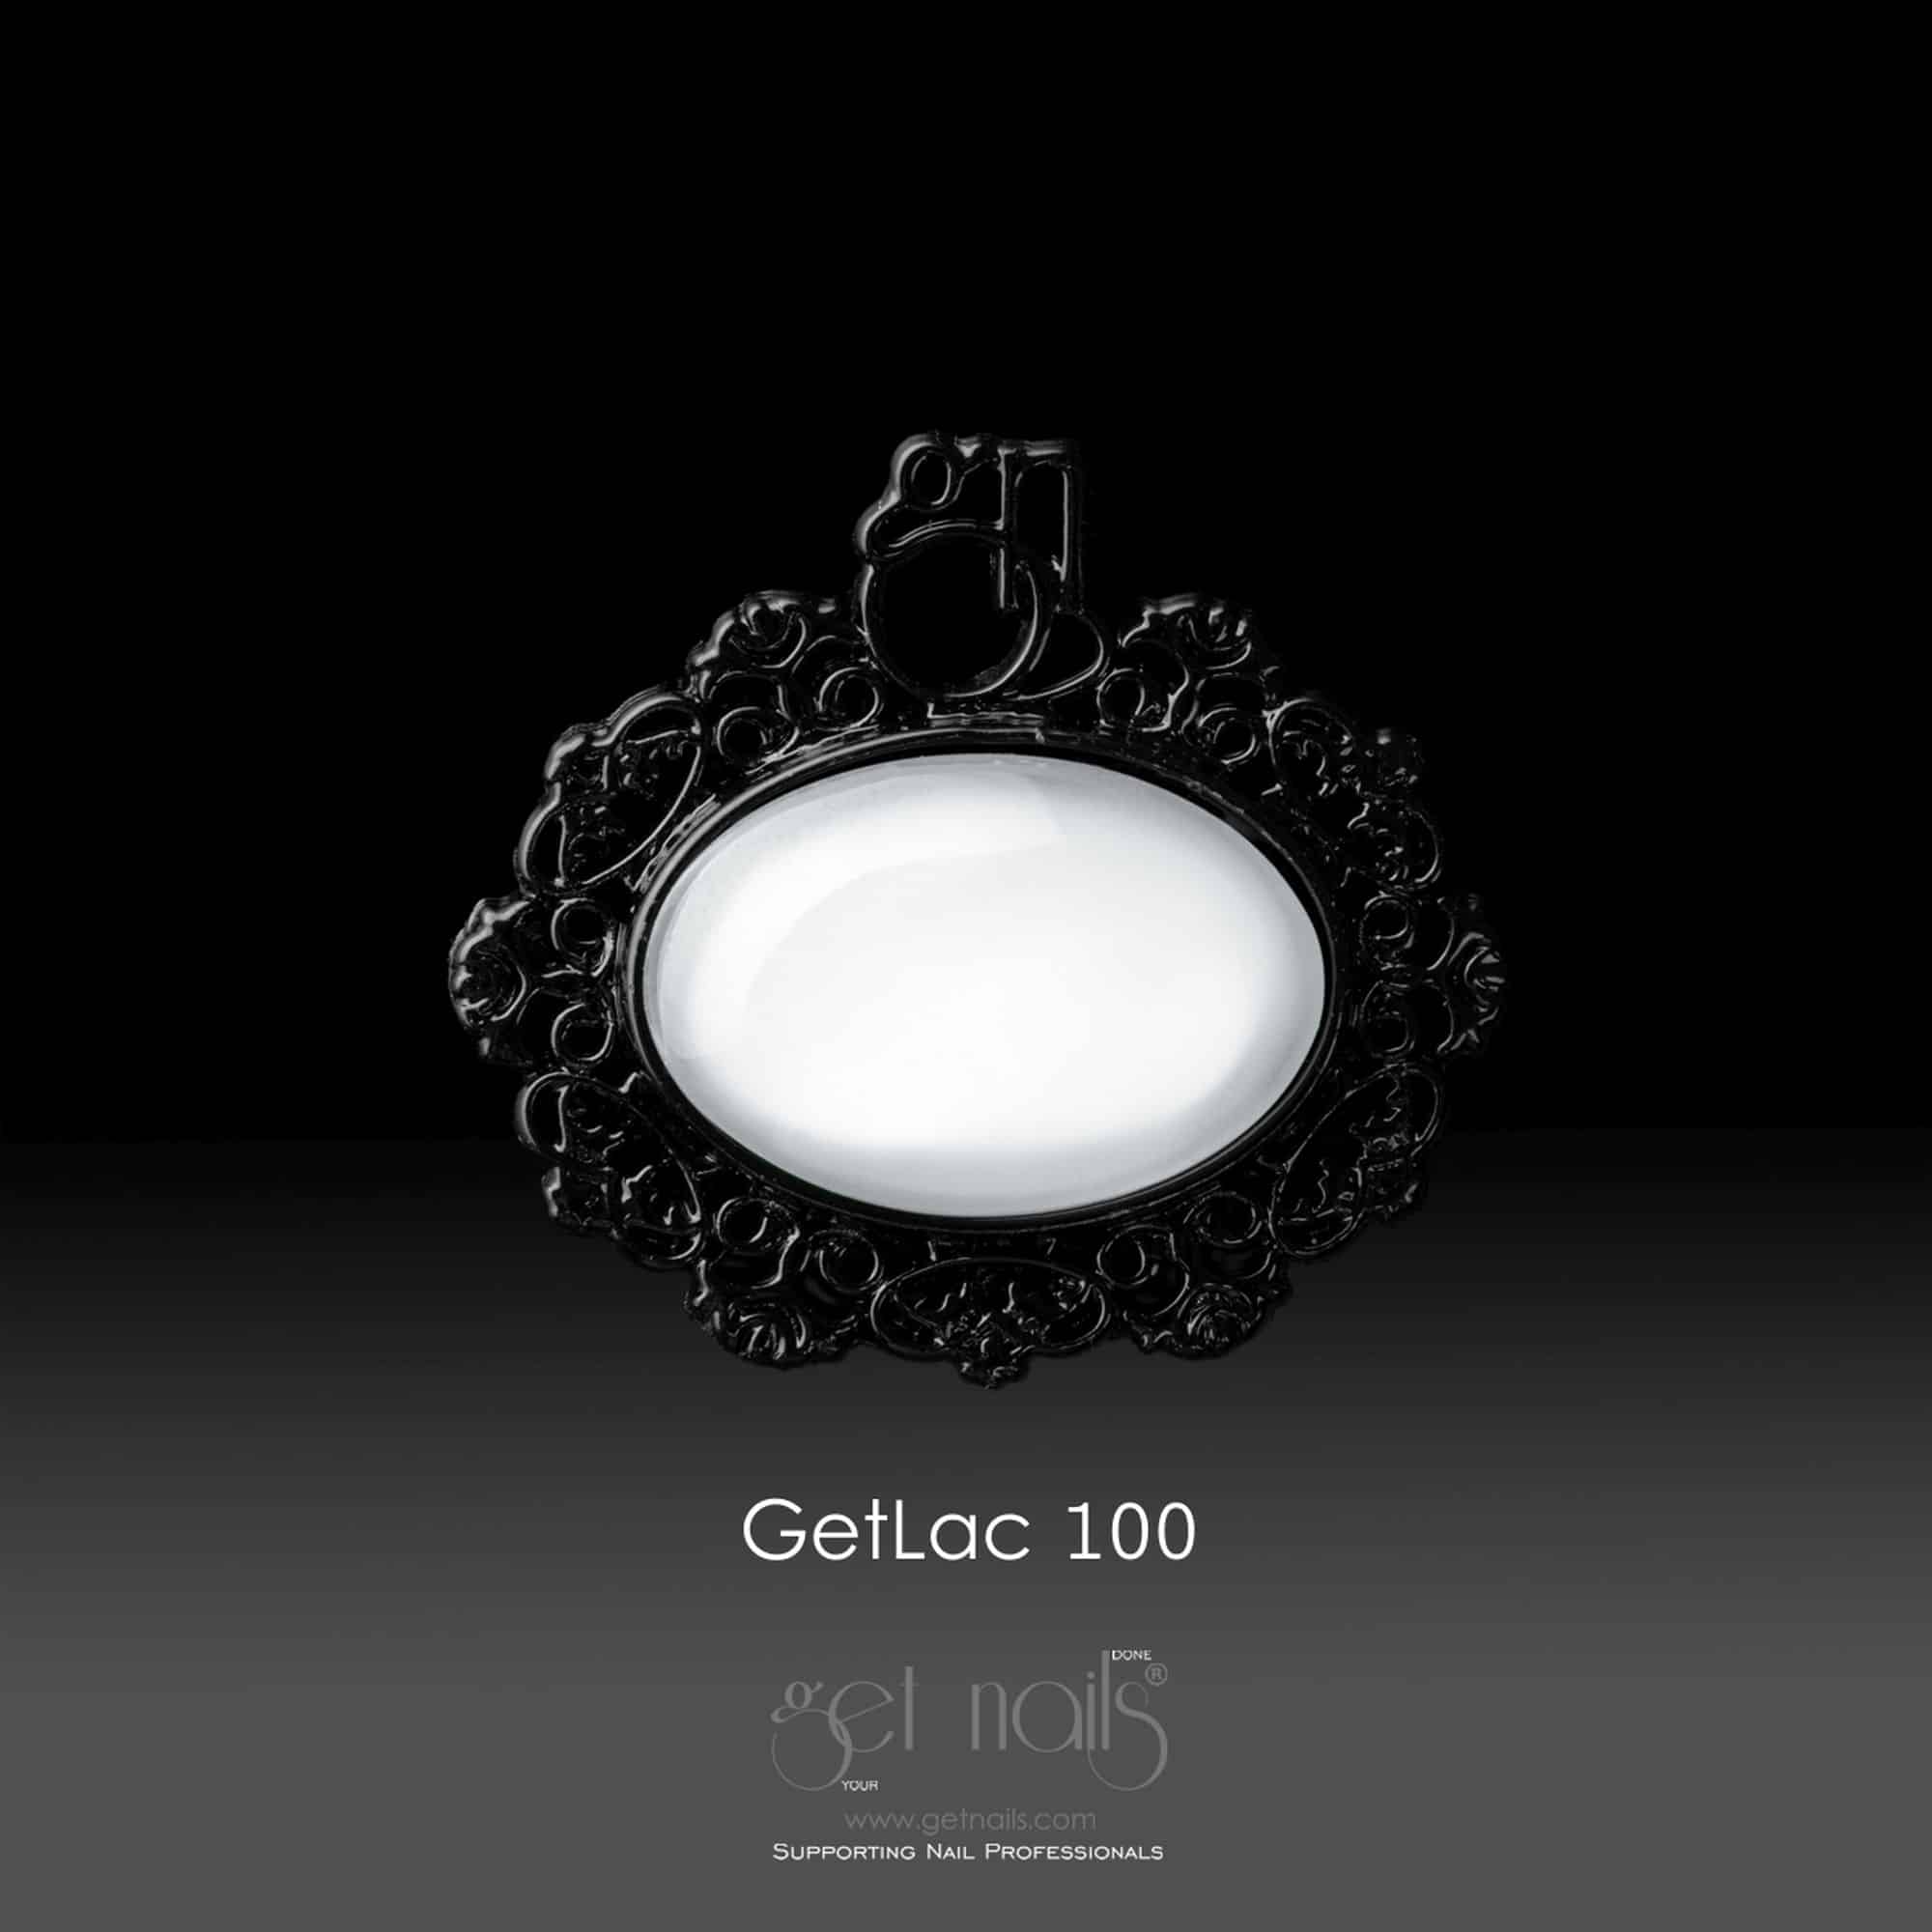 Get Nails Austria - GetLac 100 White 15g